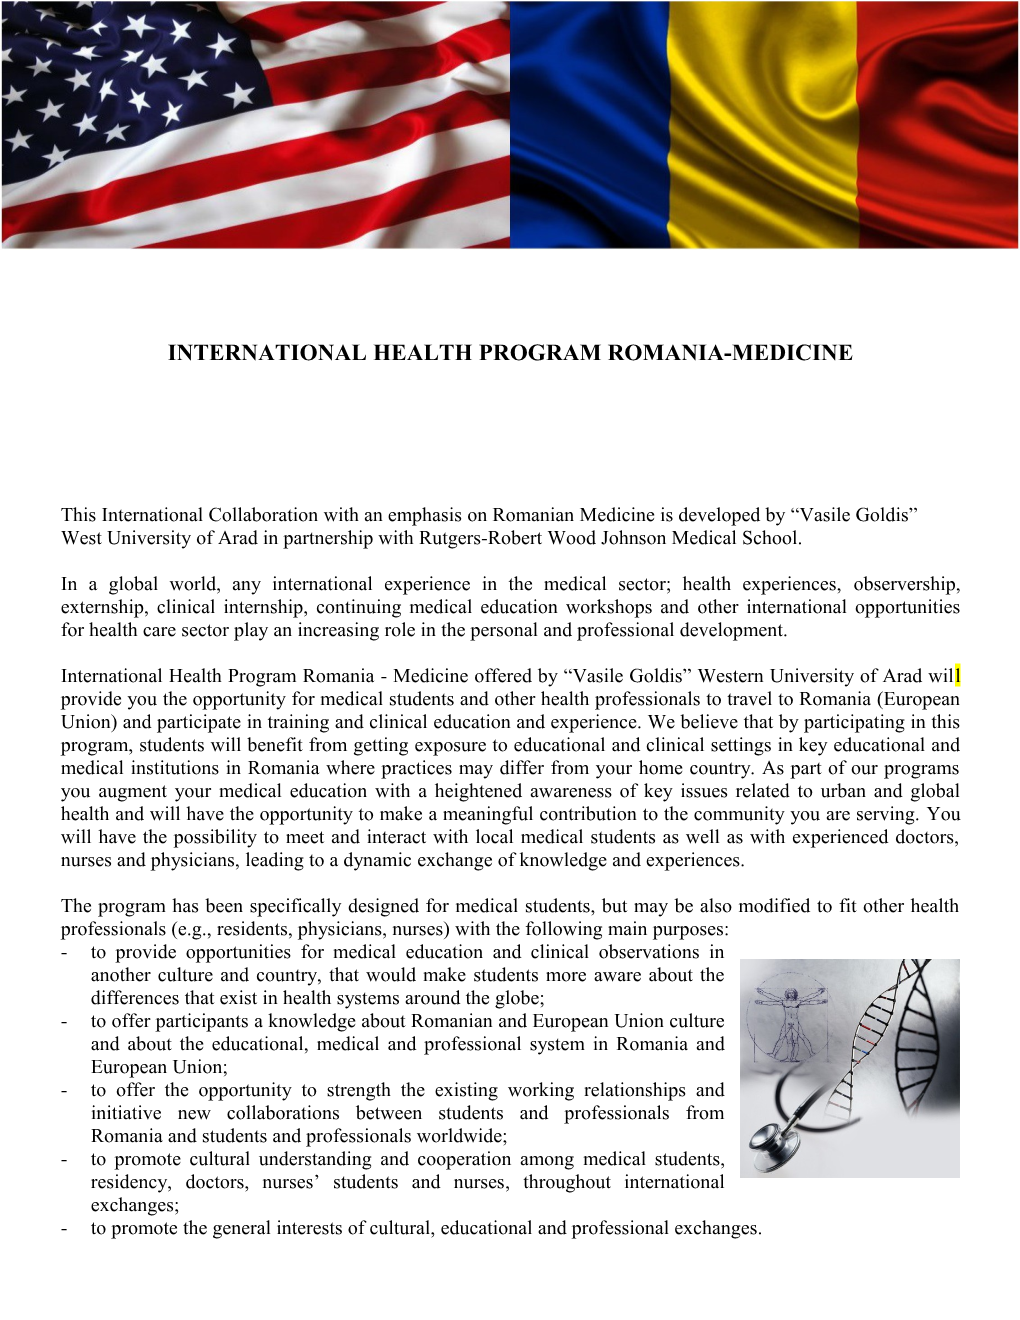 Romanian Medical Internship and Cultural Exchange Program